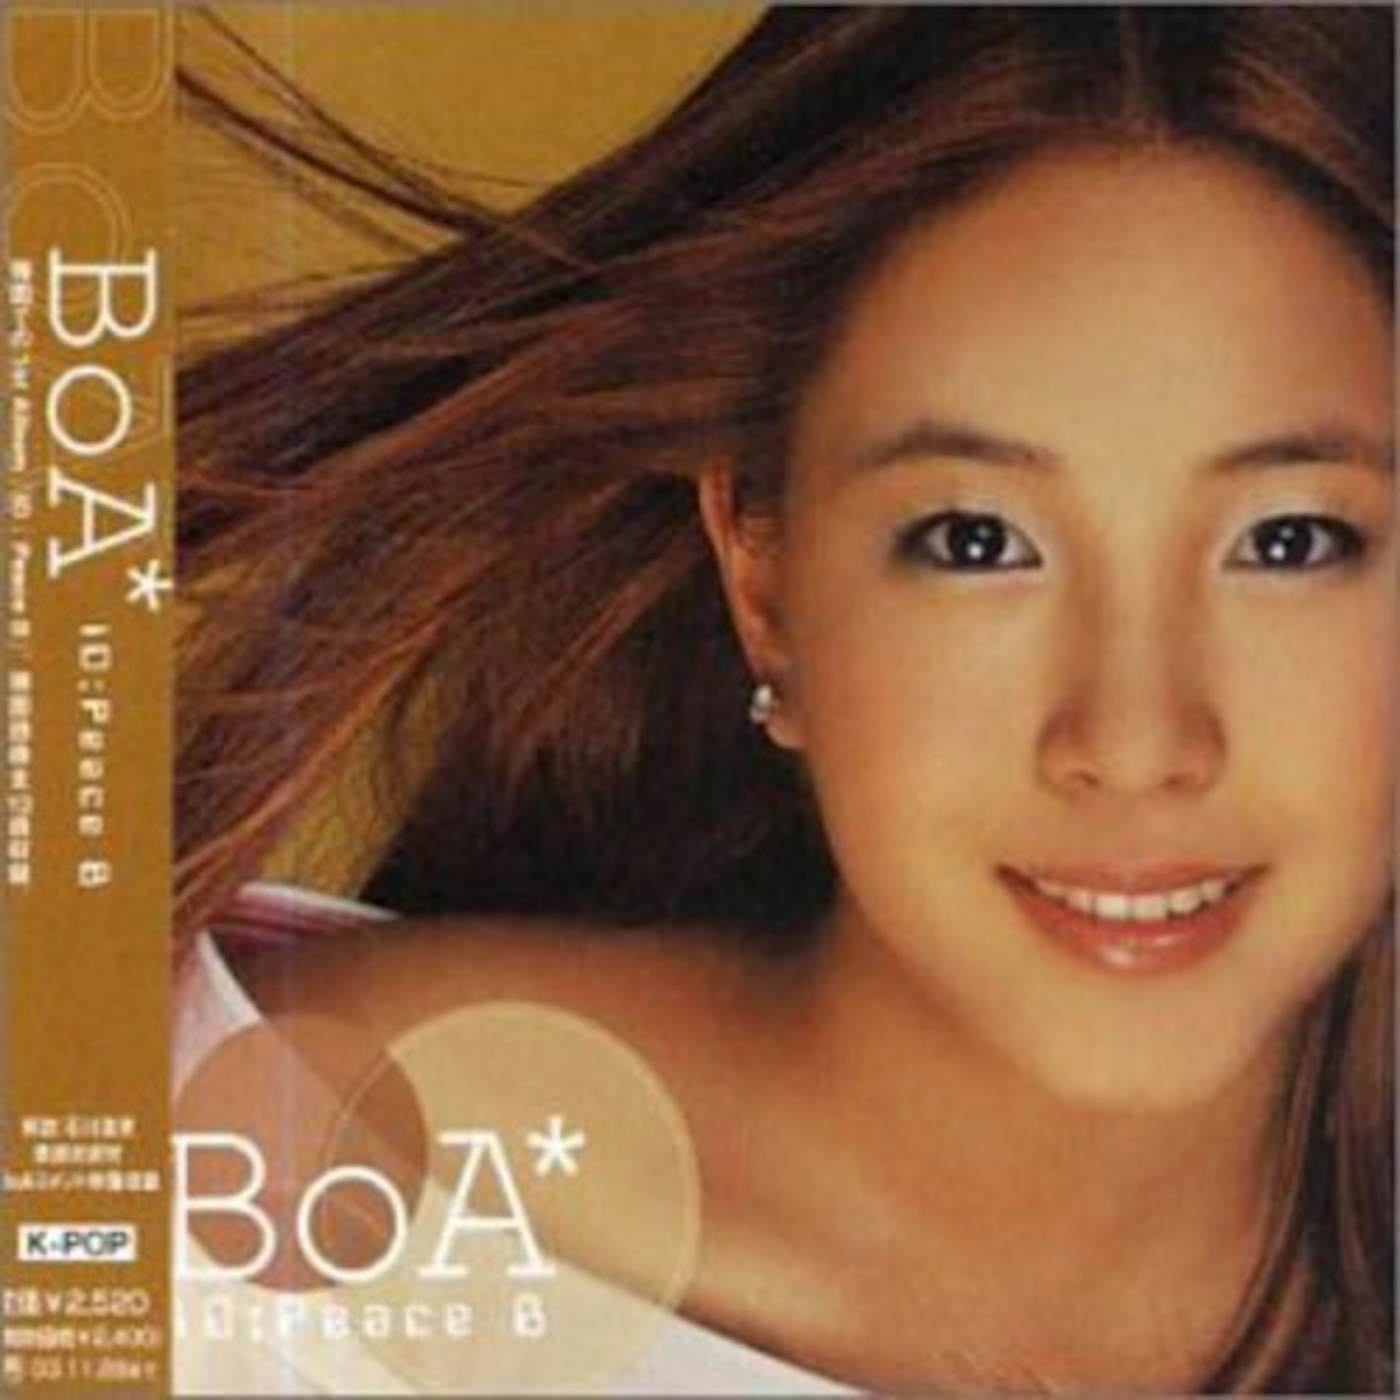 BoA ID;PEACE B CD